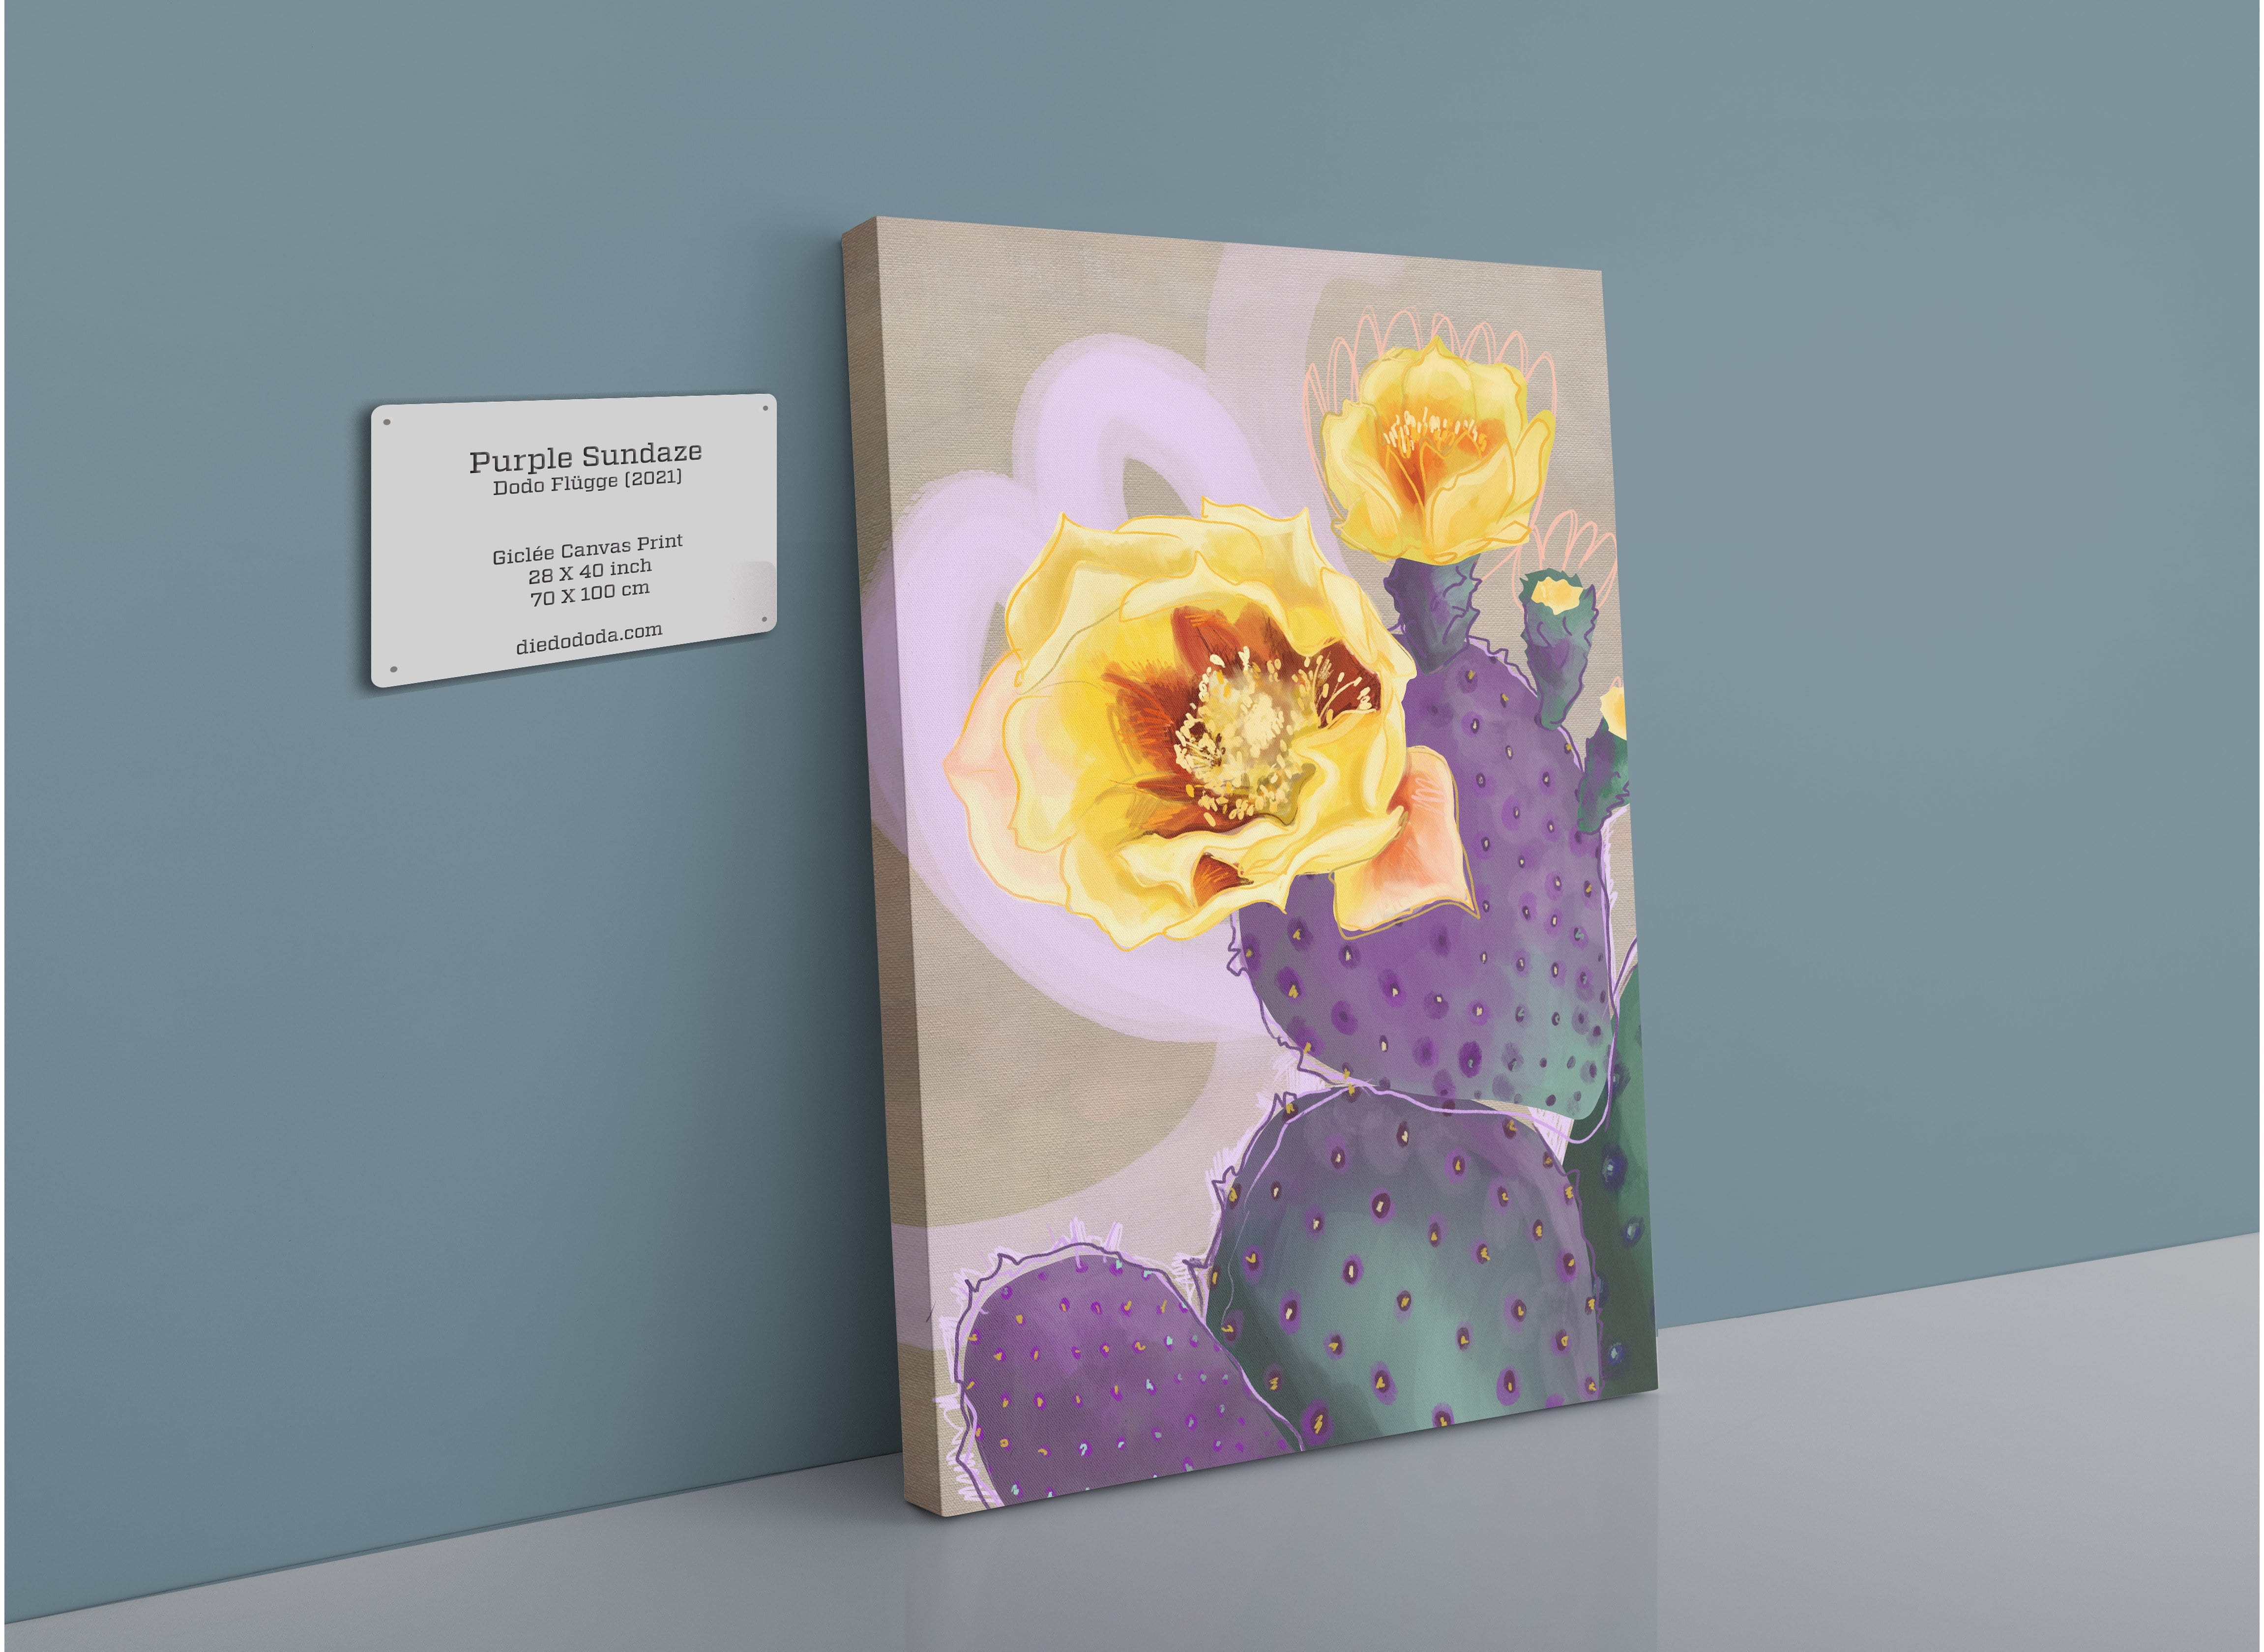 Purple Sundaze Canvas Print Heat Flares 28"x40"(70x100 cm) Canvas Print